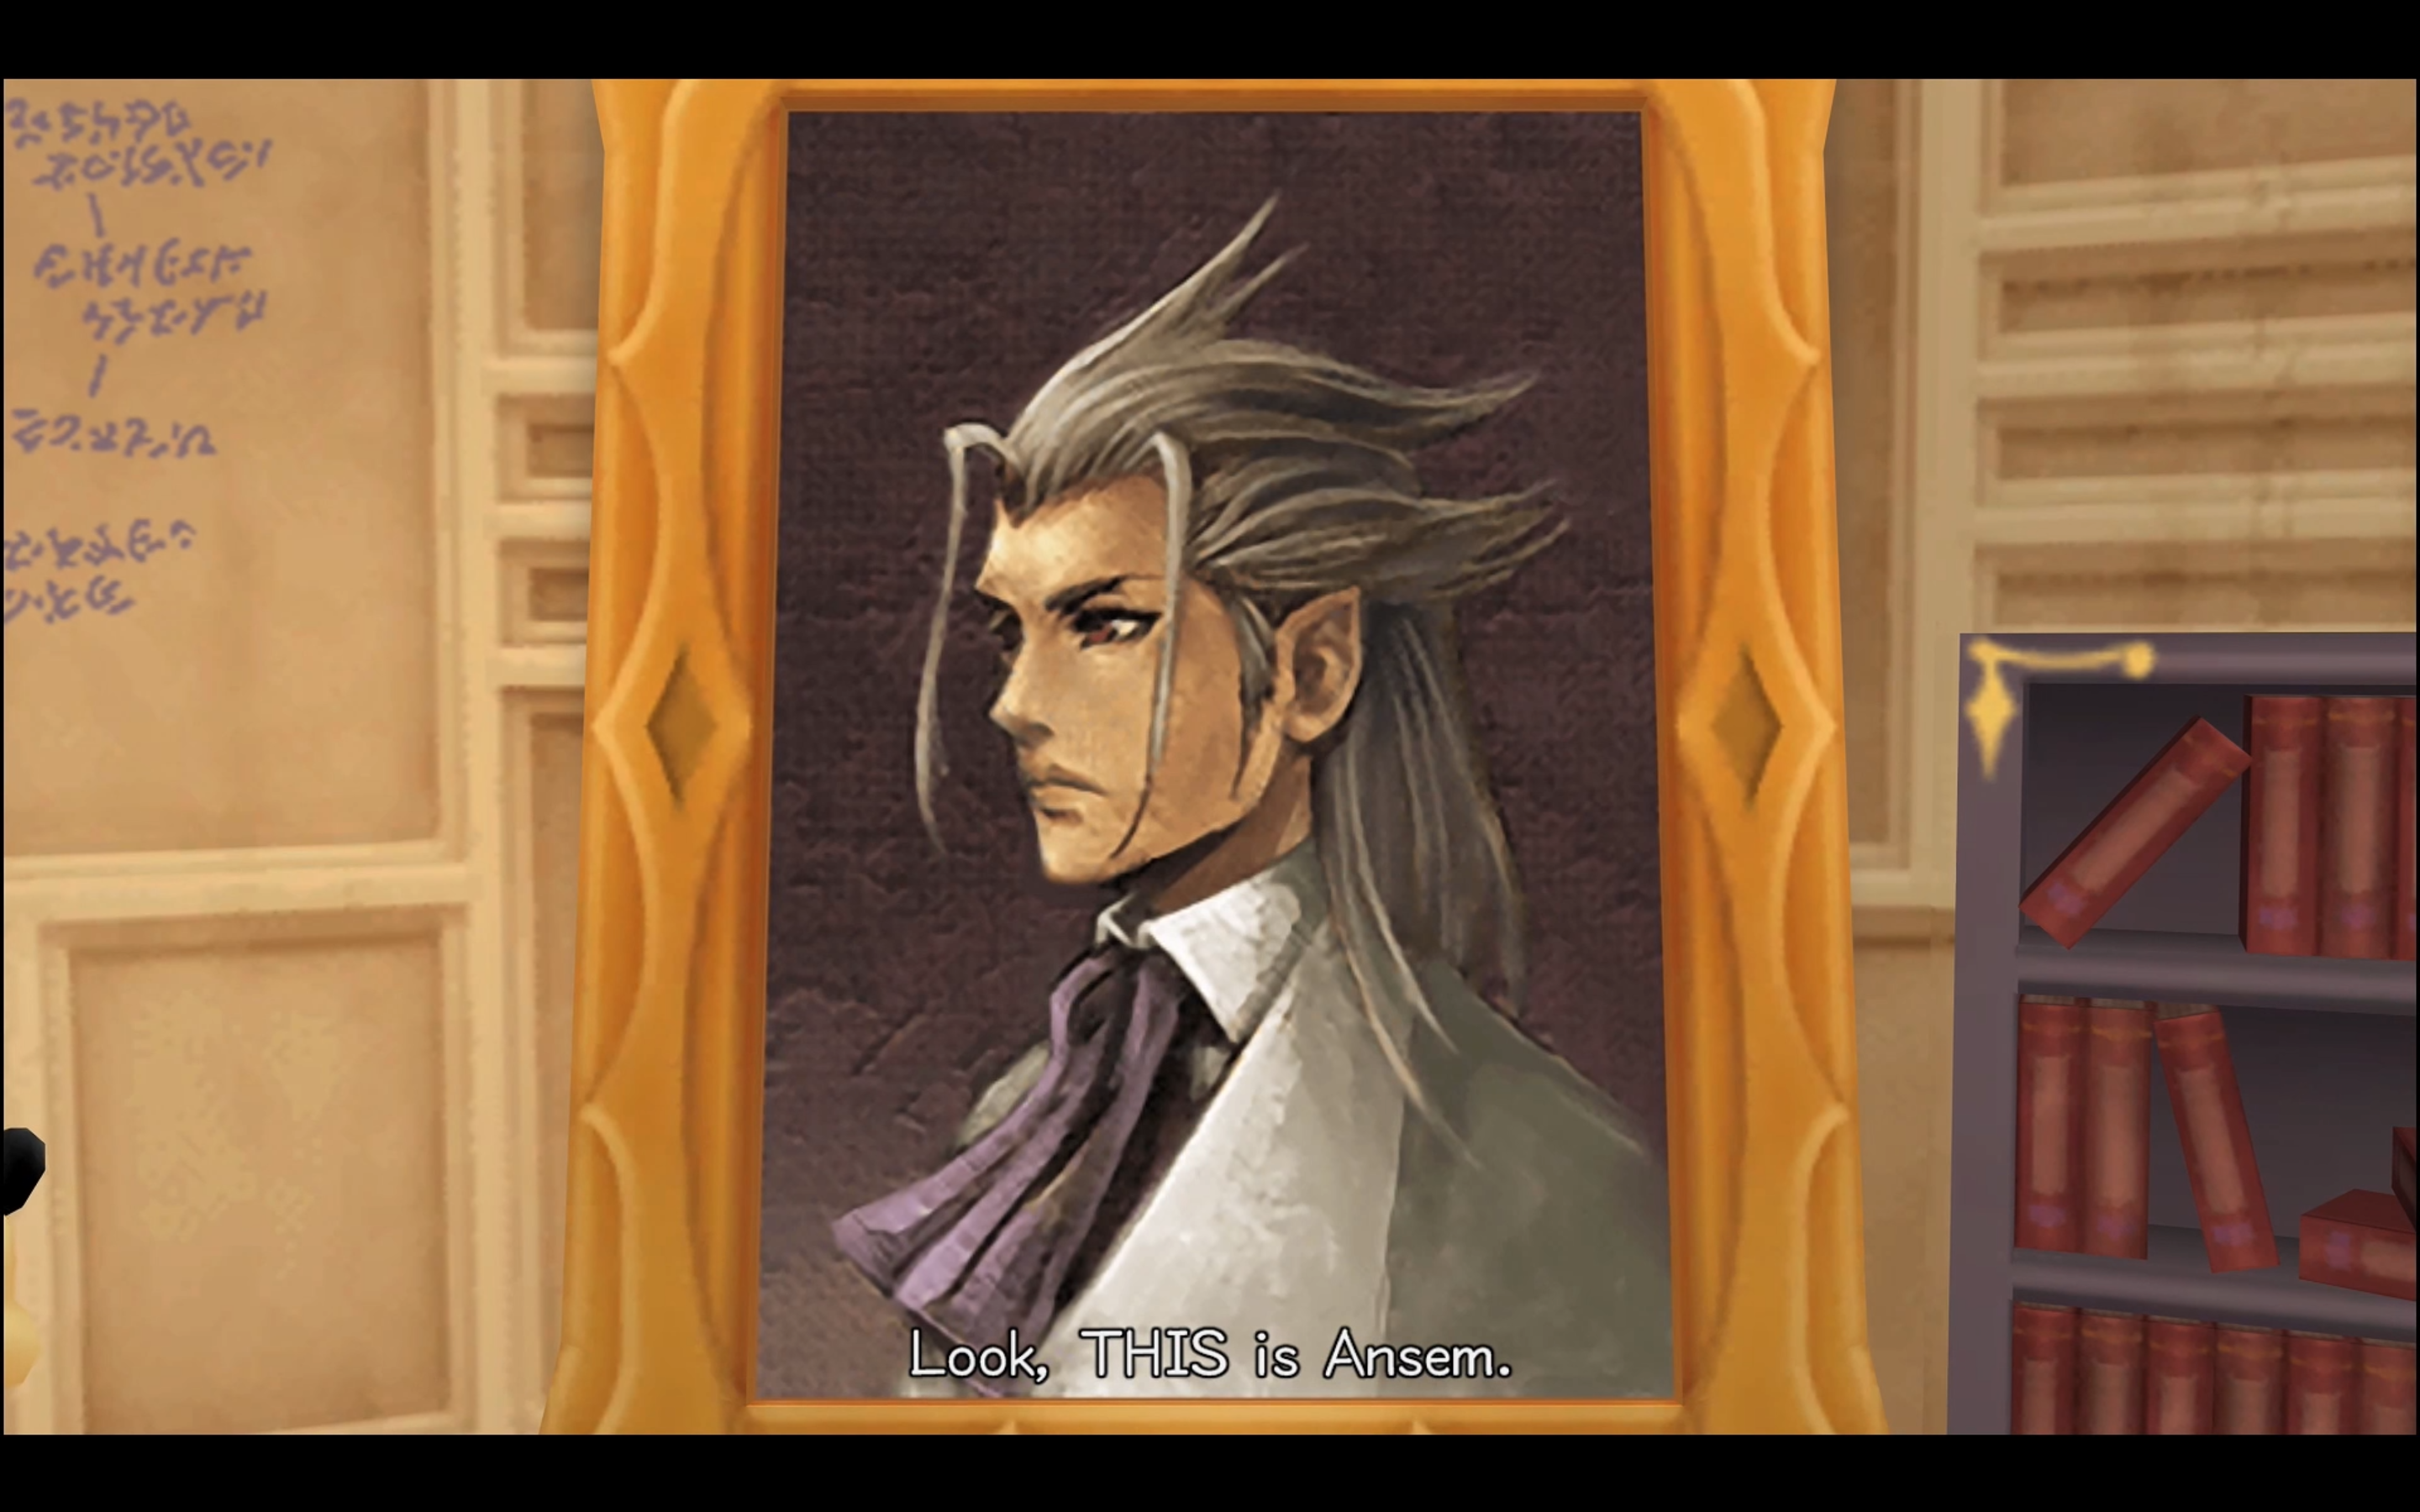 "Kingdom Hearts II." Square Enix. 2007.
A portrait of Xehanort, Ansem's apprentice. 